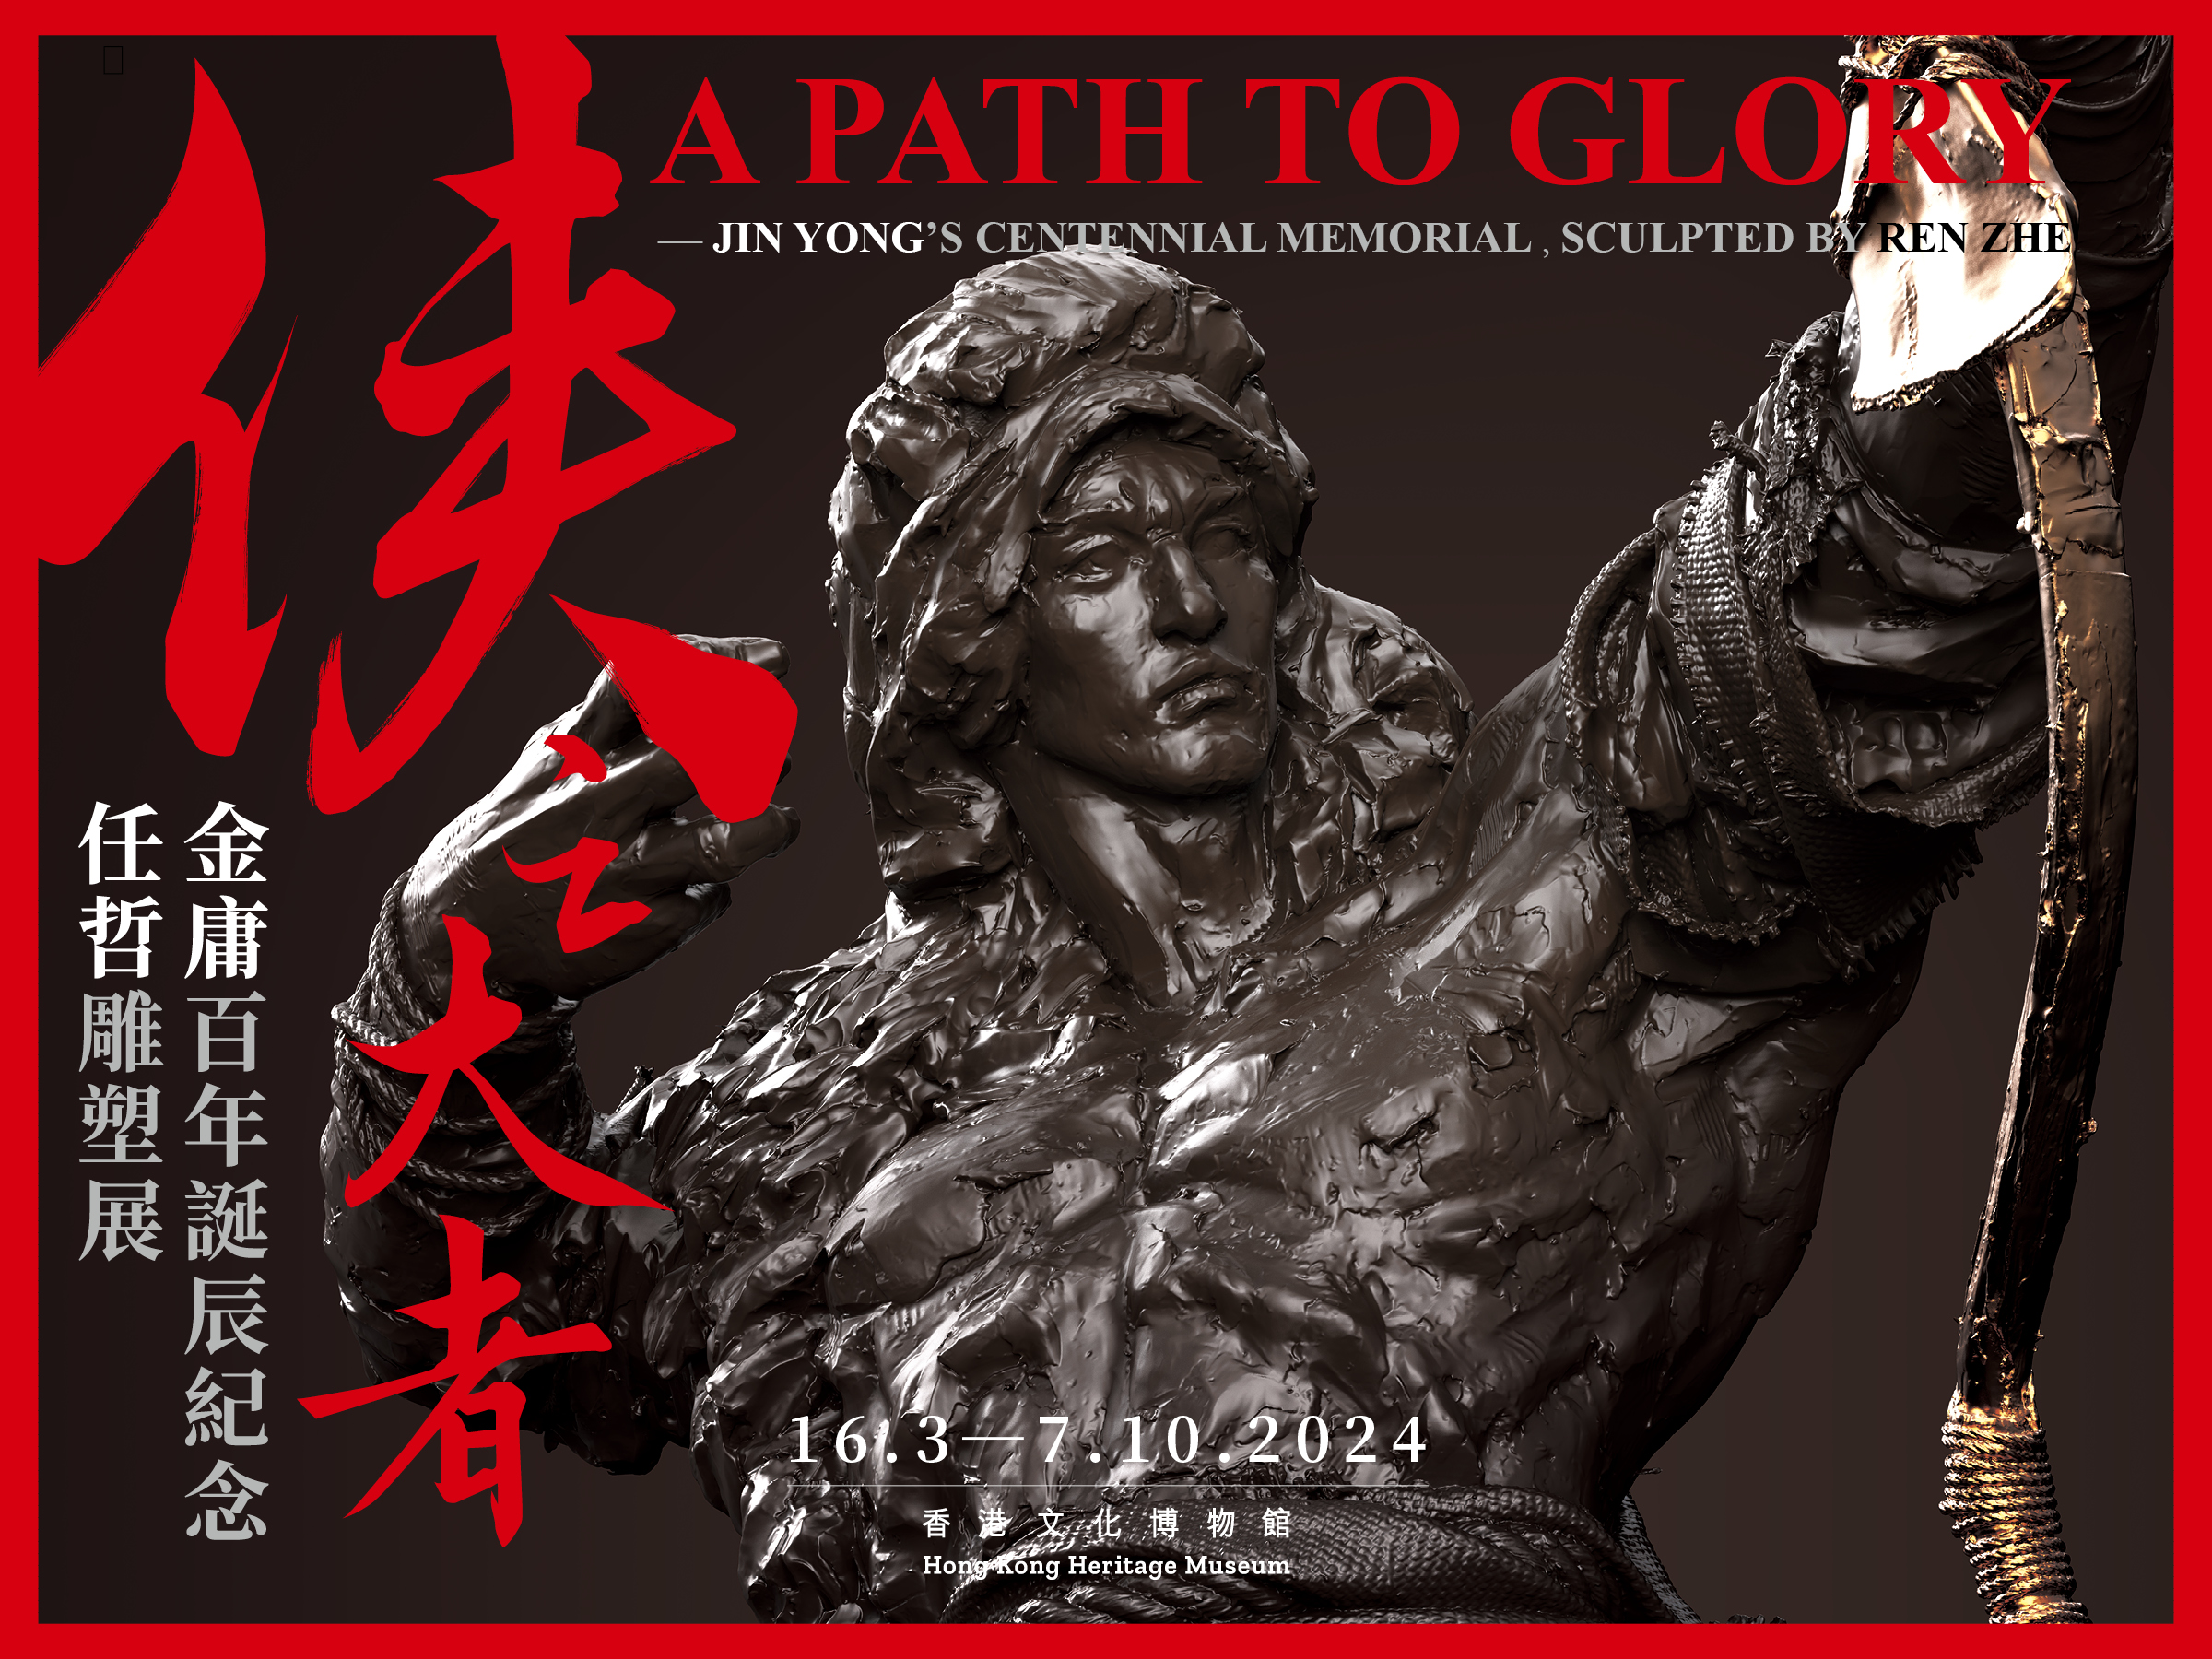 A Path to Glory – Jin Yong’s Centennial Memorial, Sculpted by Ren Zhe